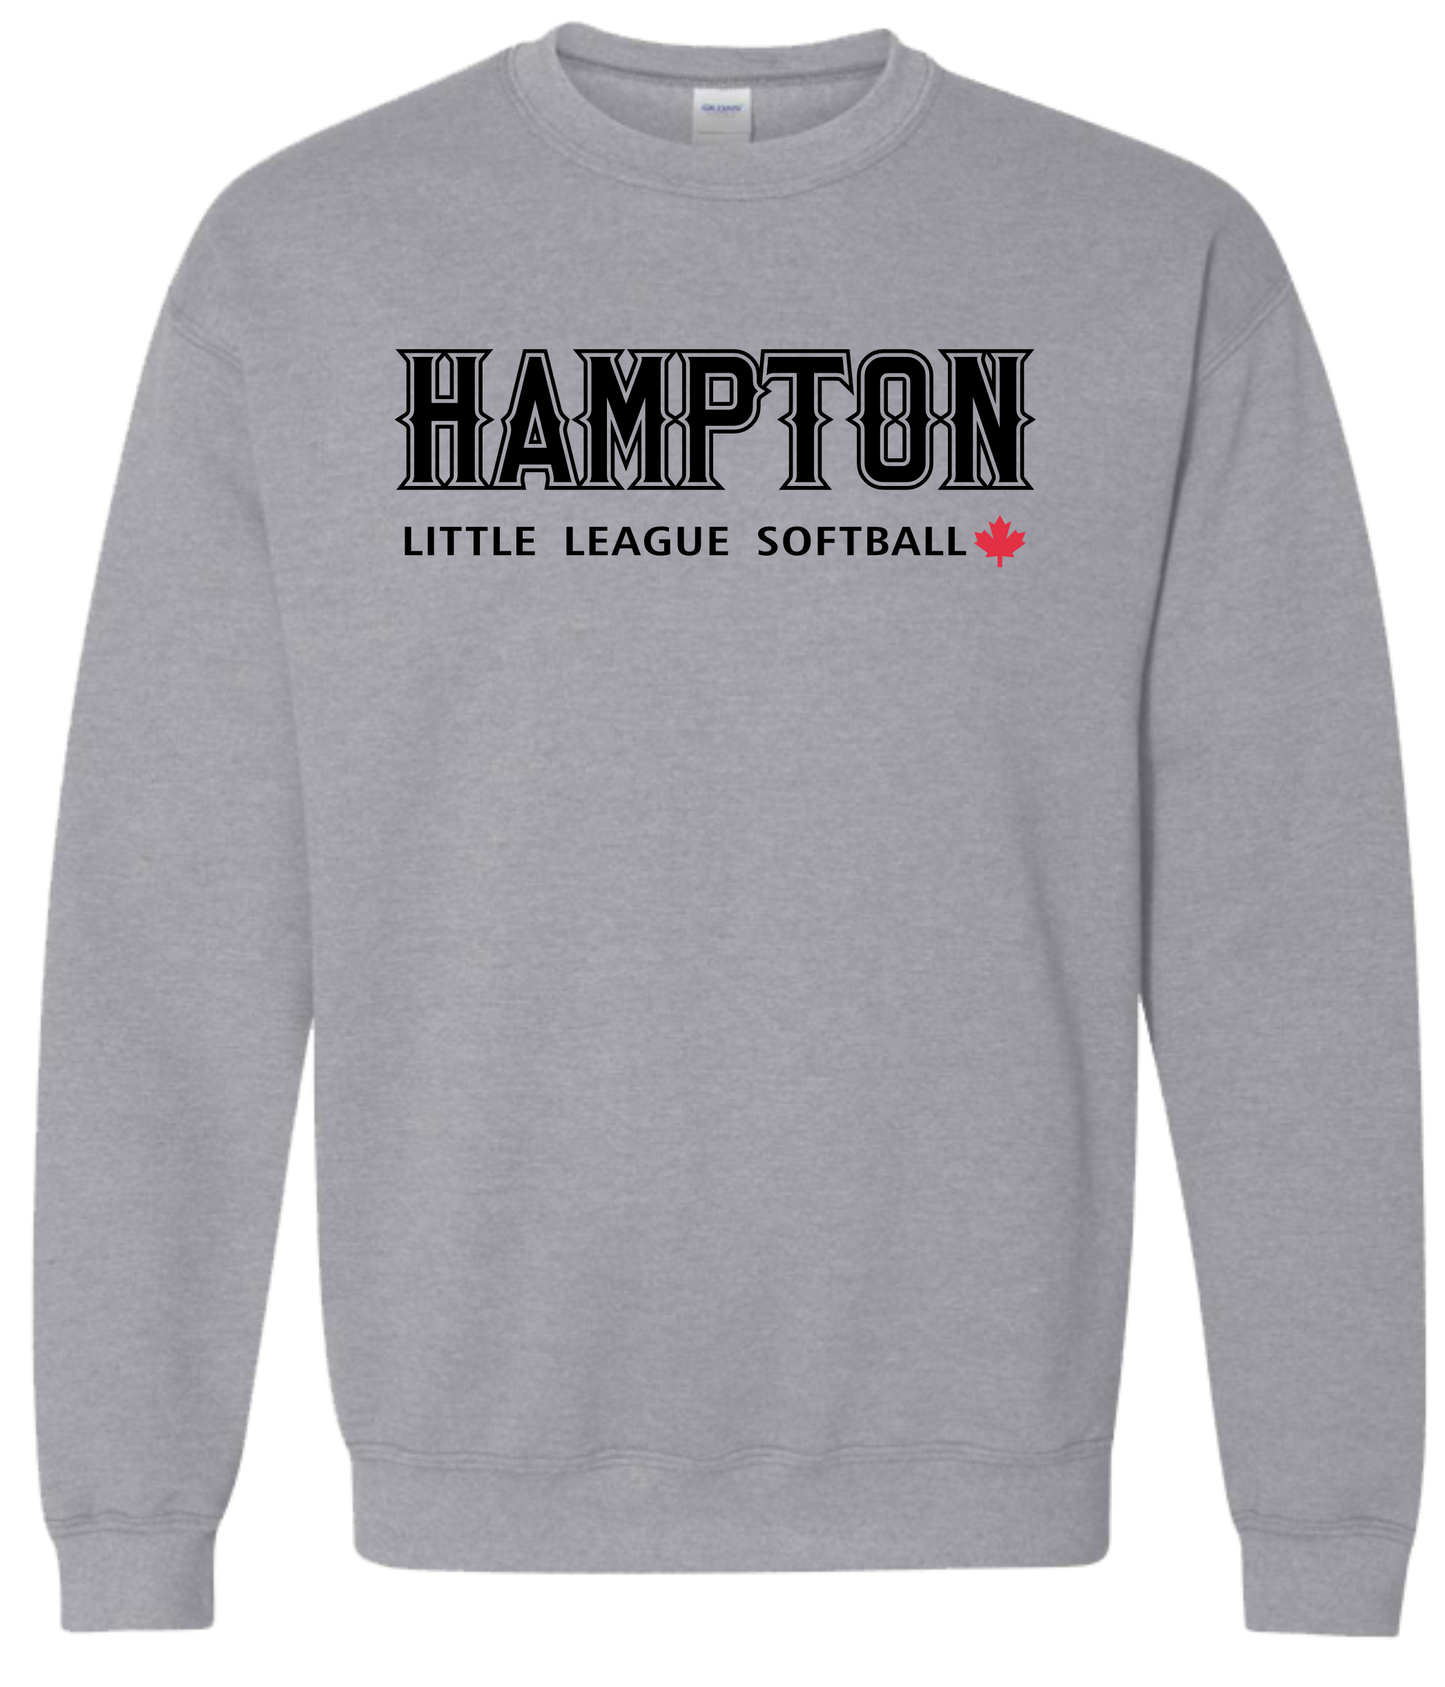 Hampton Little League Softball Unisex and Youth Crewneck Sweatshirt